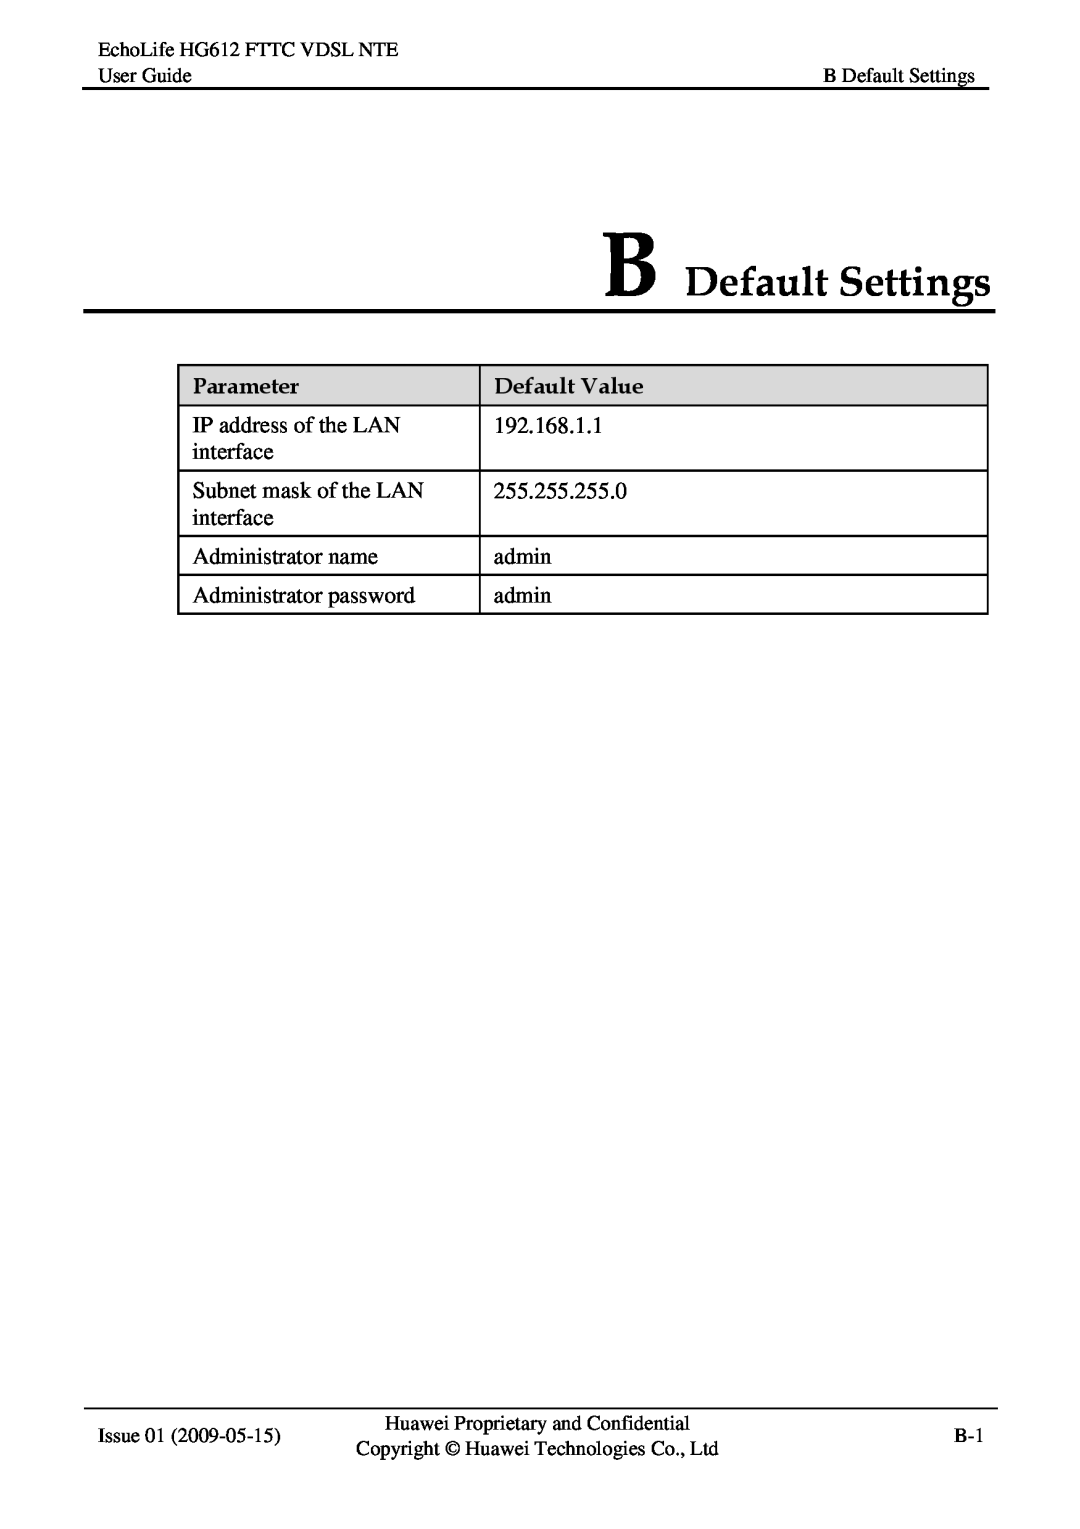 Huawei HG612FTTC VDSL NTE manual B Default Settings, Parameter, Default Value 